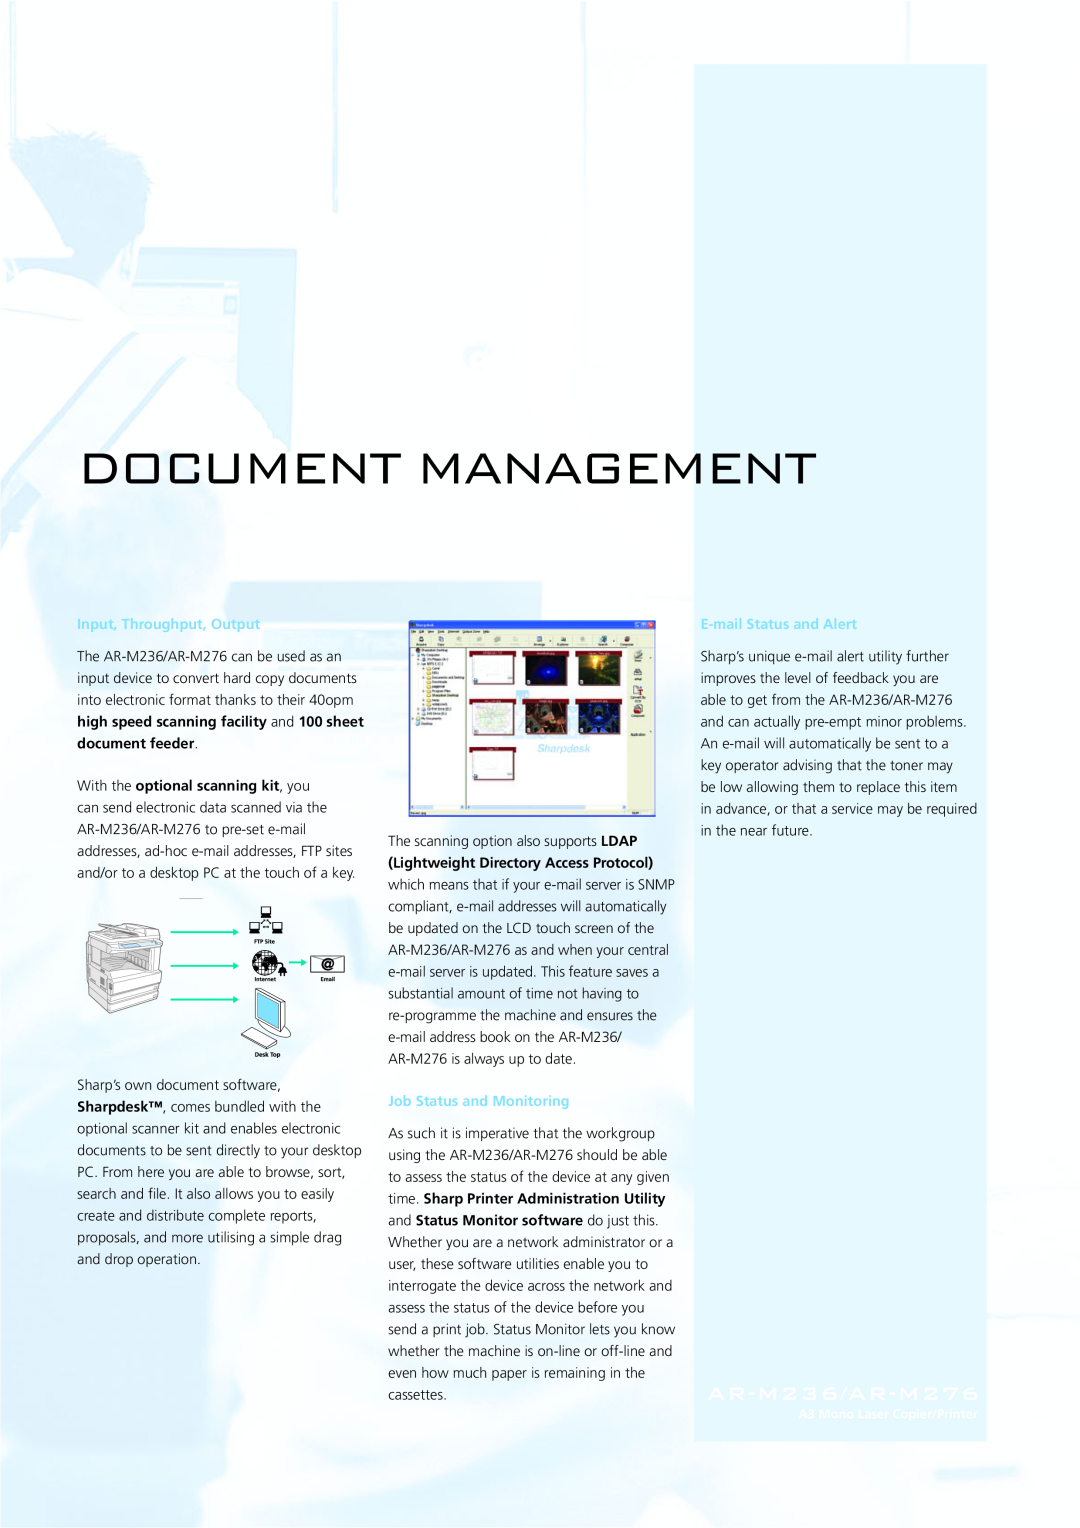 Sharp manual Document Management, Input, Throughput, Output, Lightweight Directory Access Protocol, AR-M236/AR-M276 